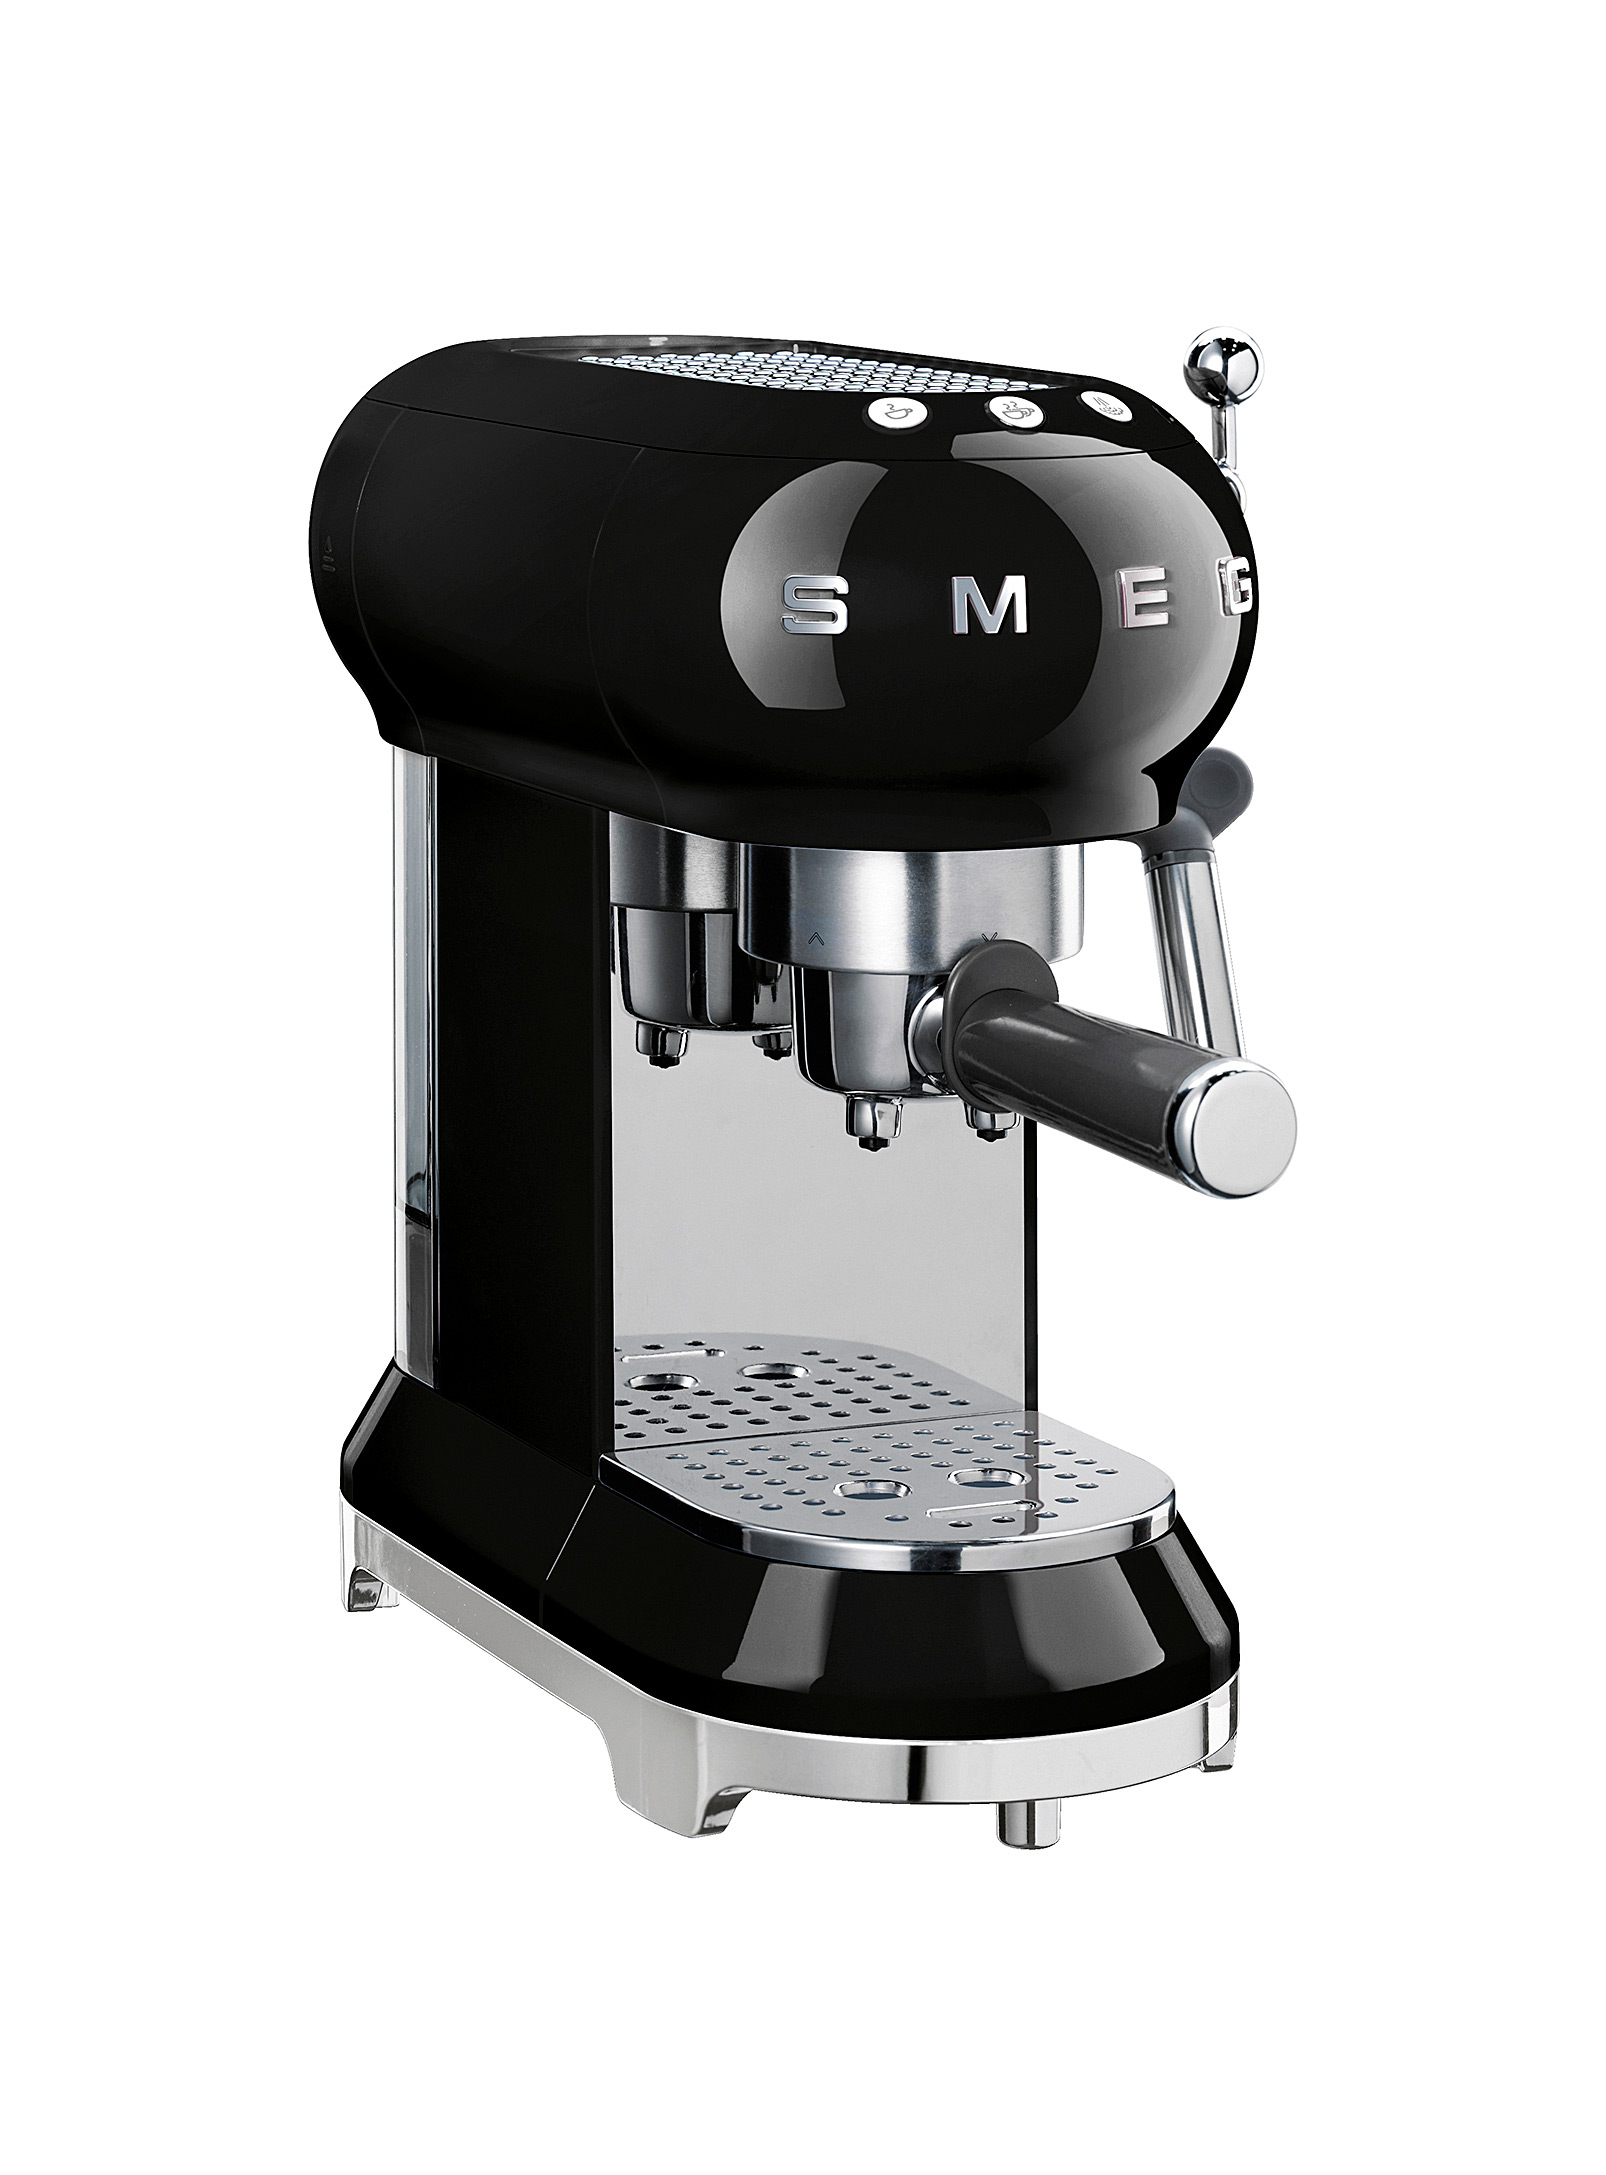 Smeg Manual Espresso Coffee Machine In Black